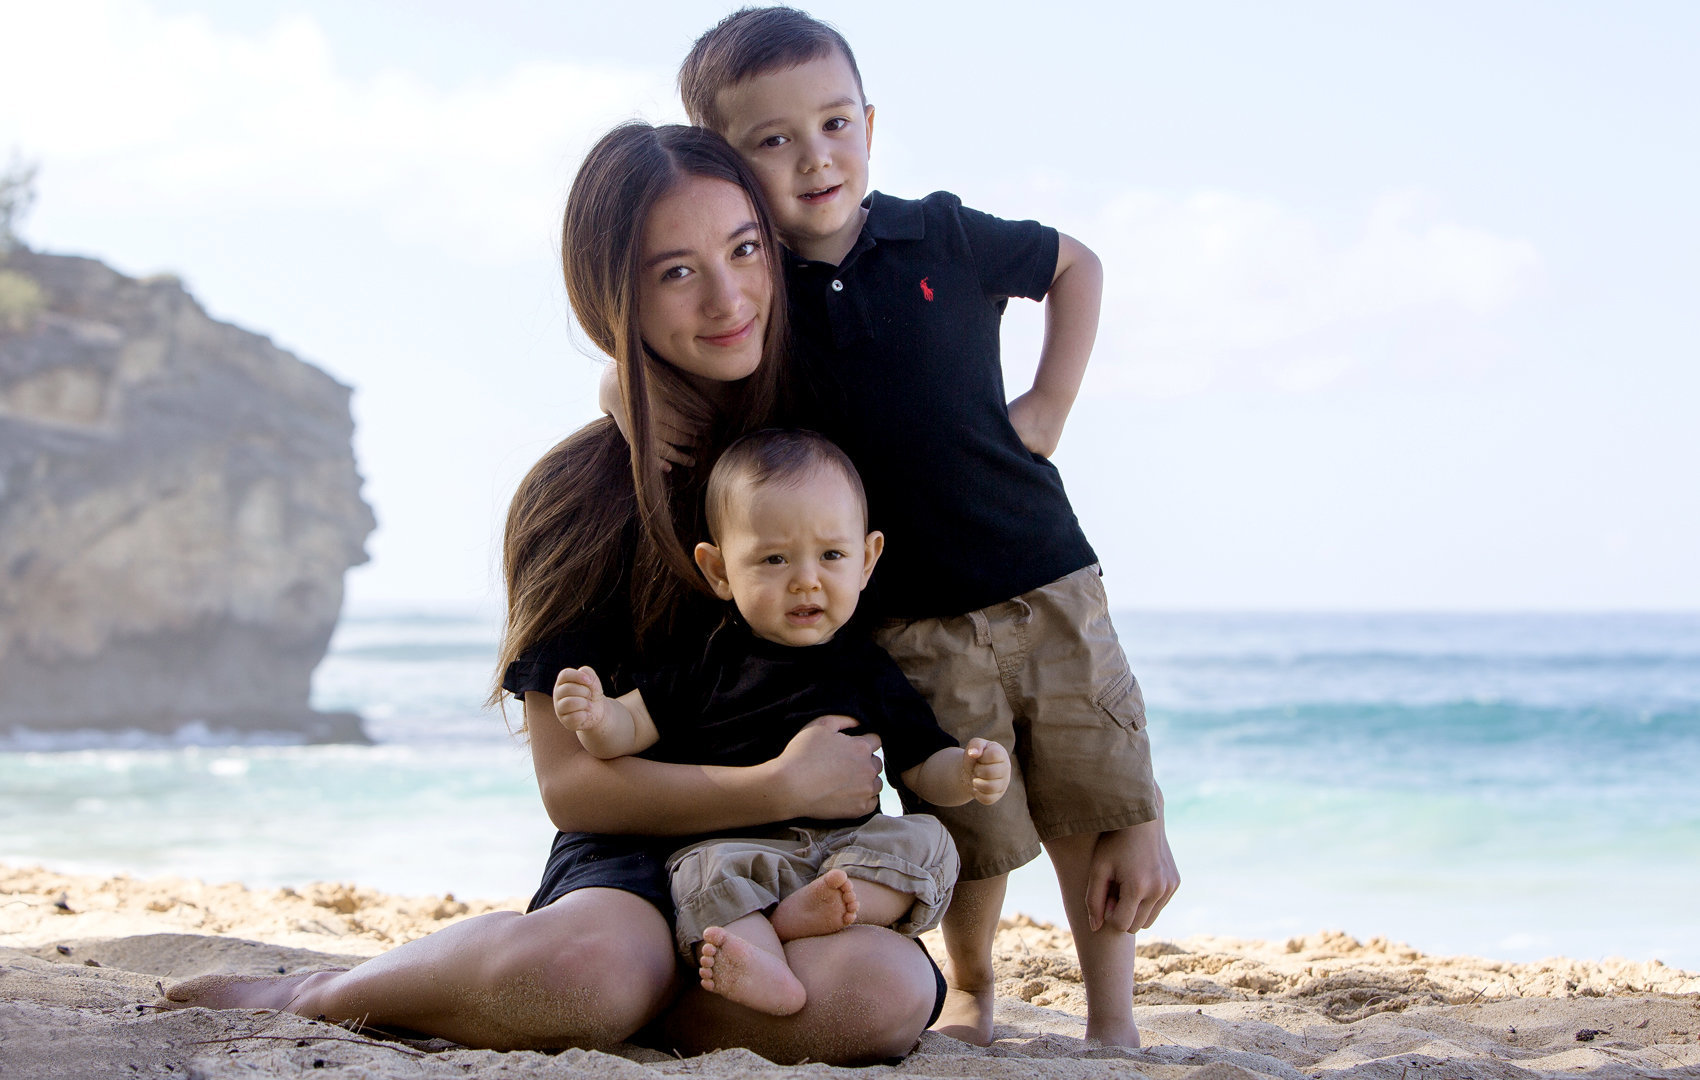 nice black shirts on this family portrait on Kauai.